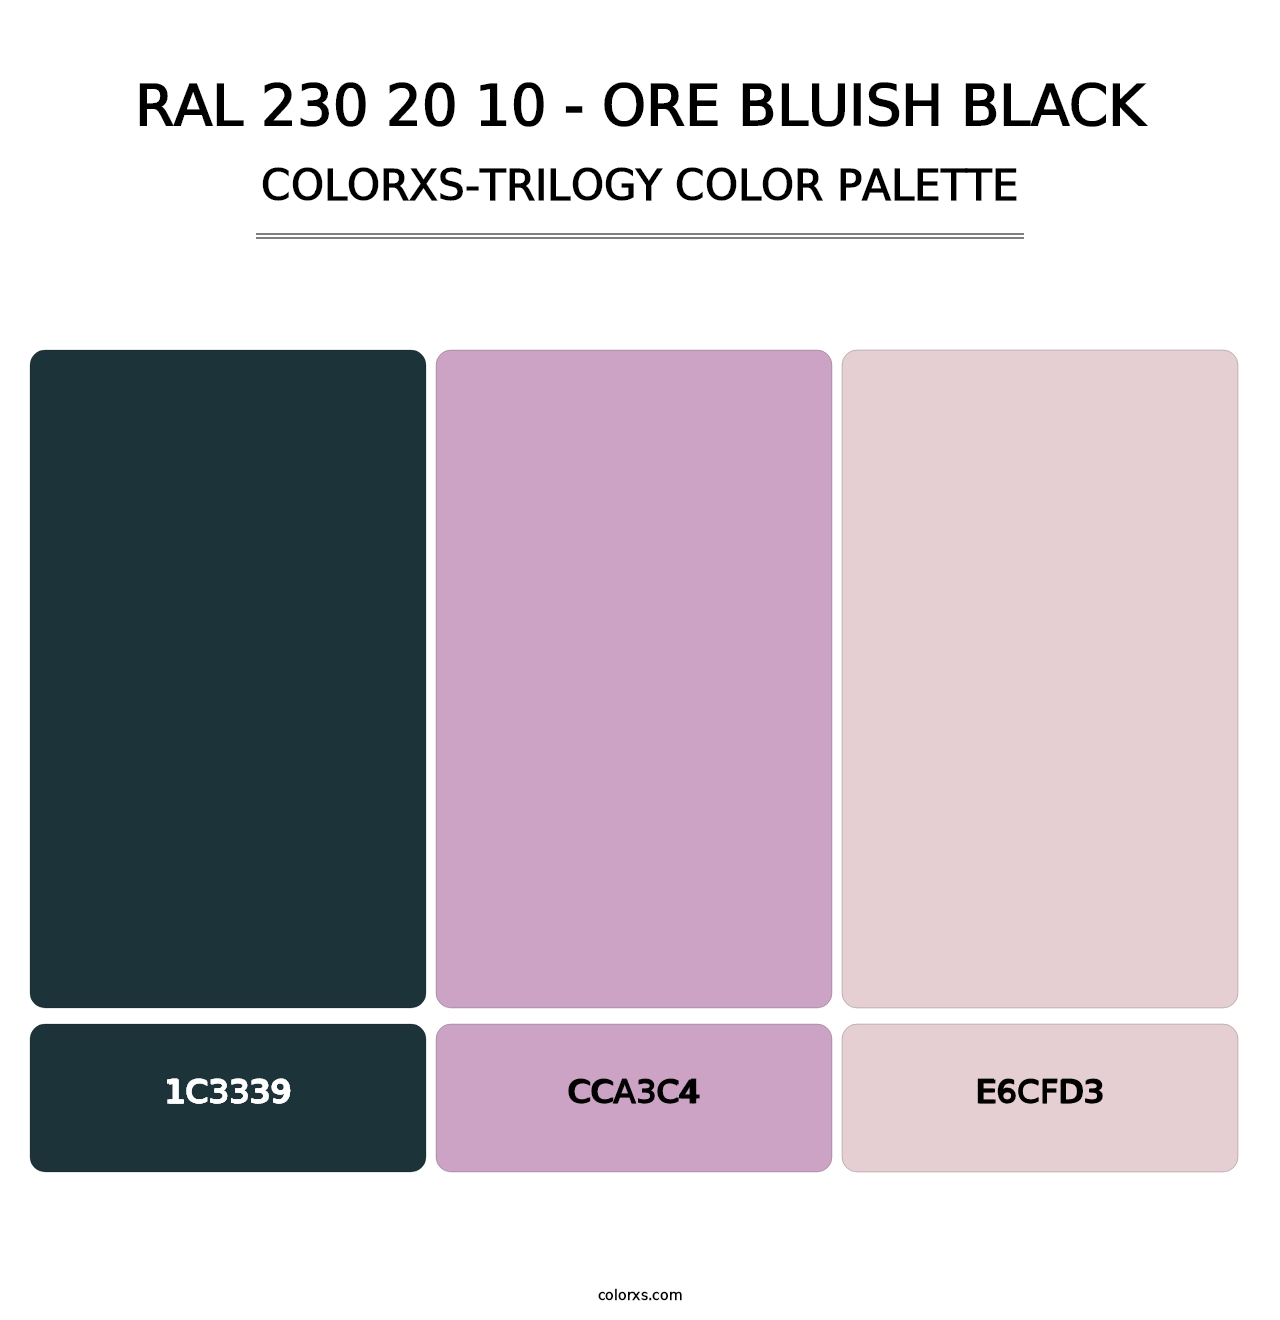 RAL 230 20 10 - Ore Bluish Black - Colorxs Trilogy Palette